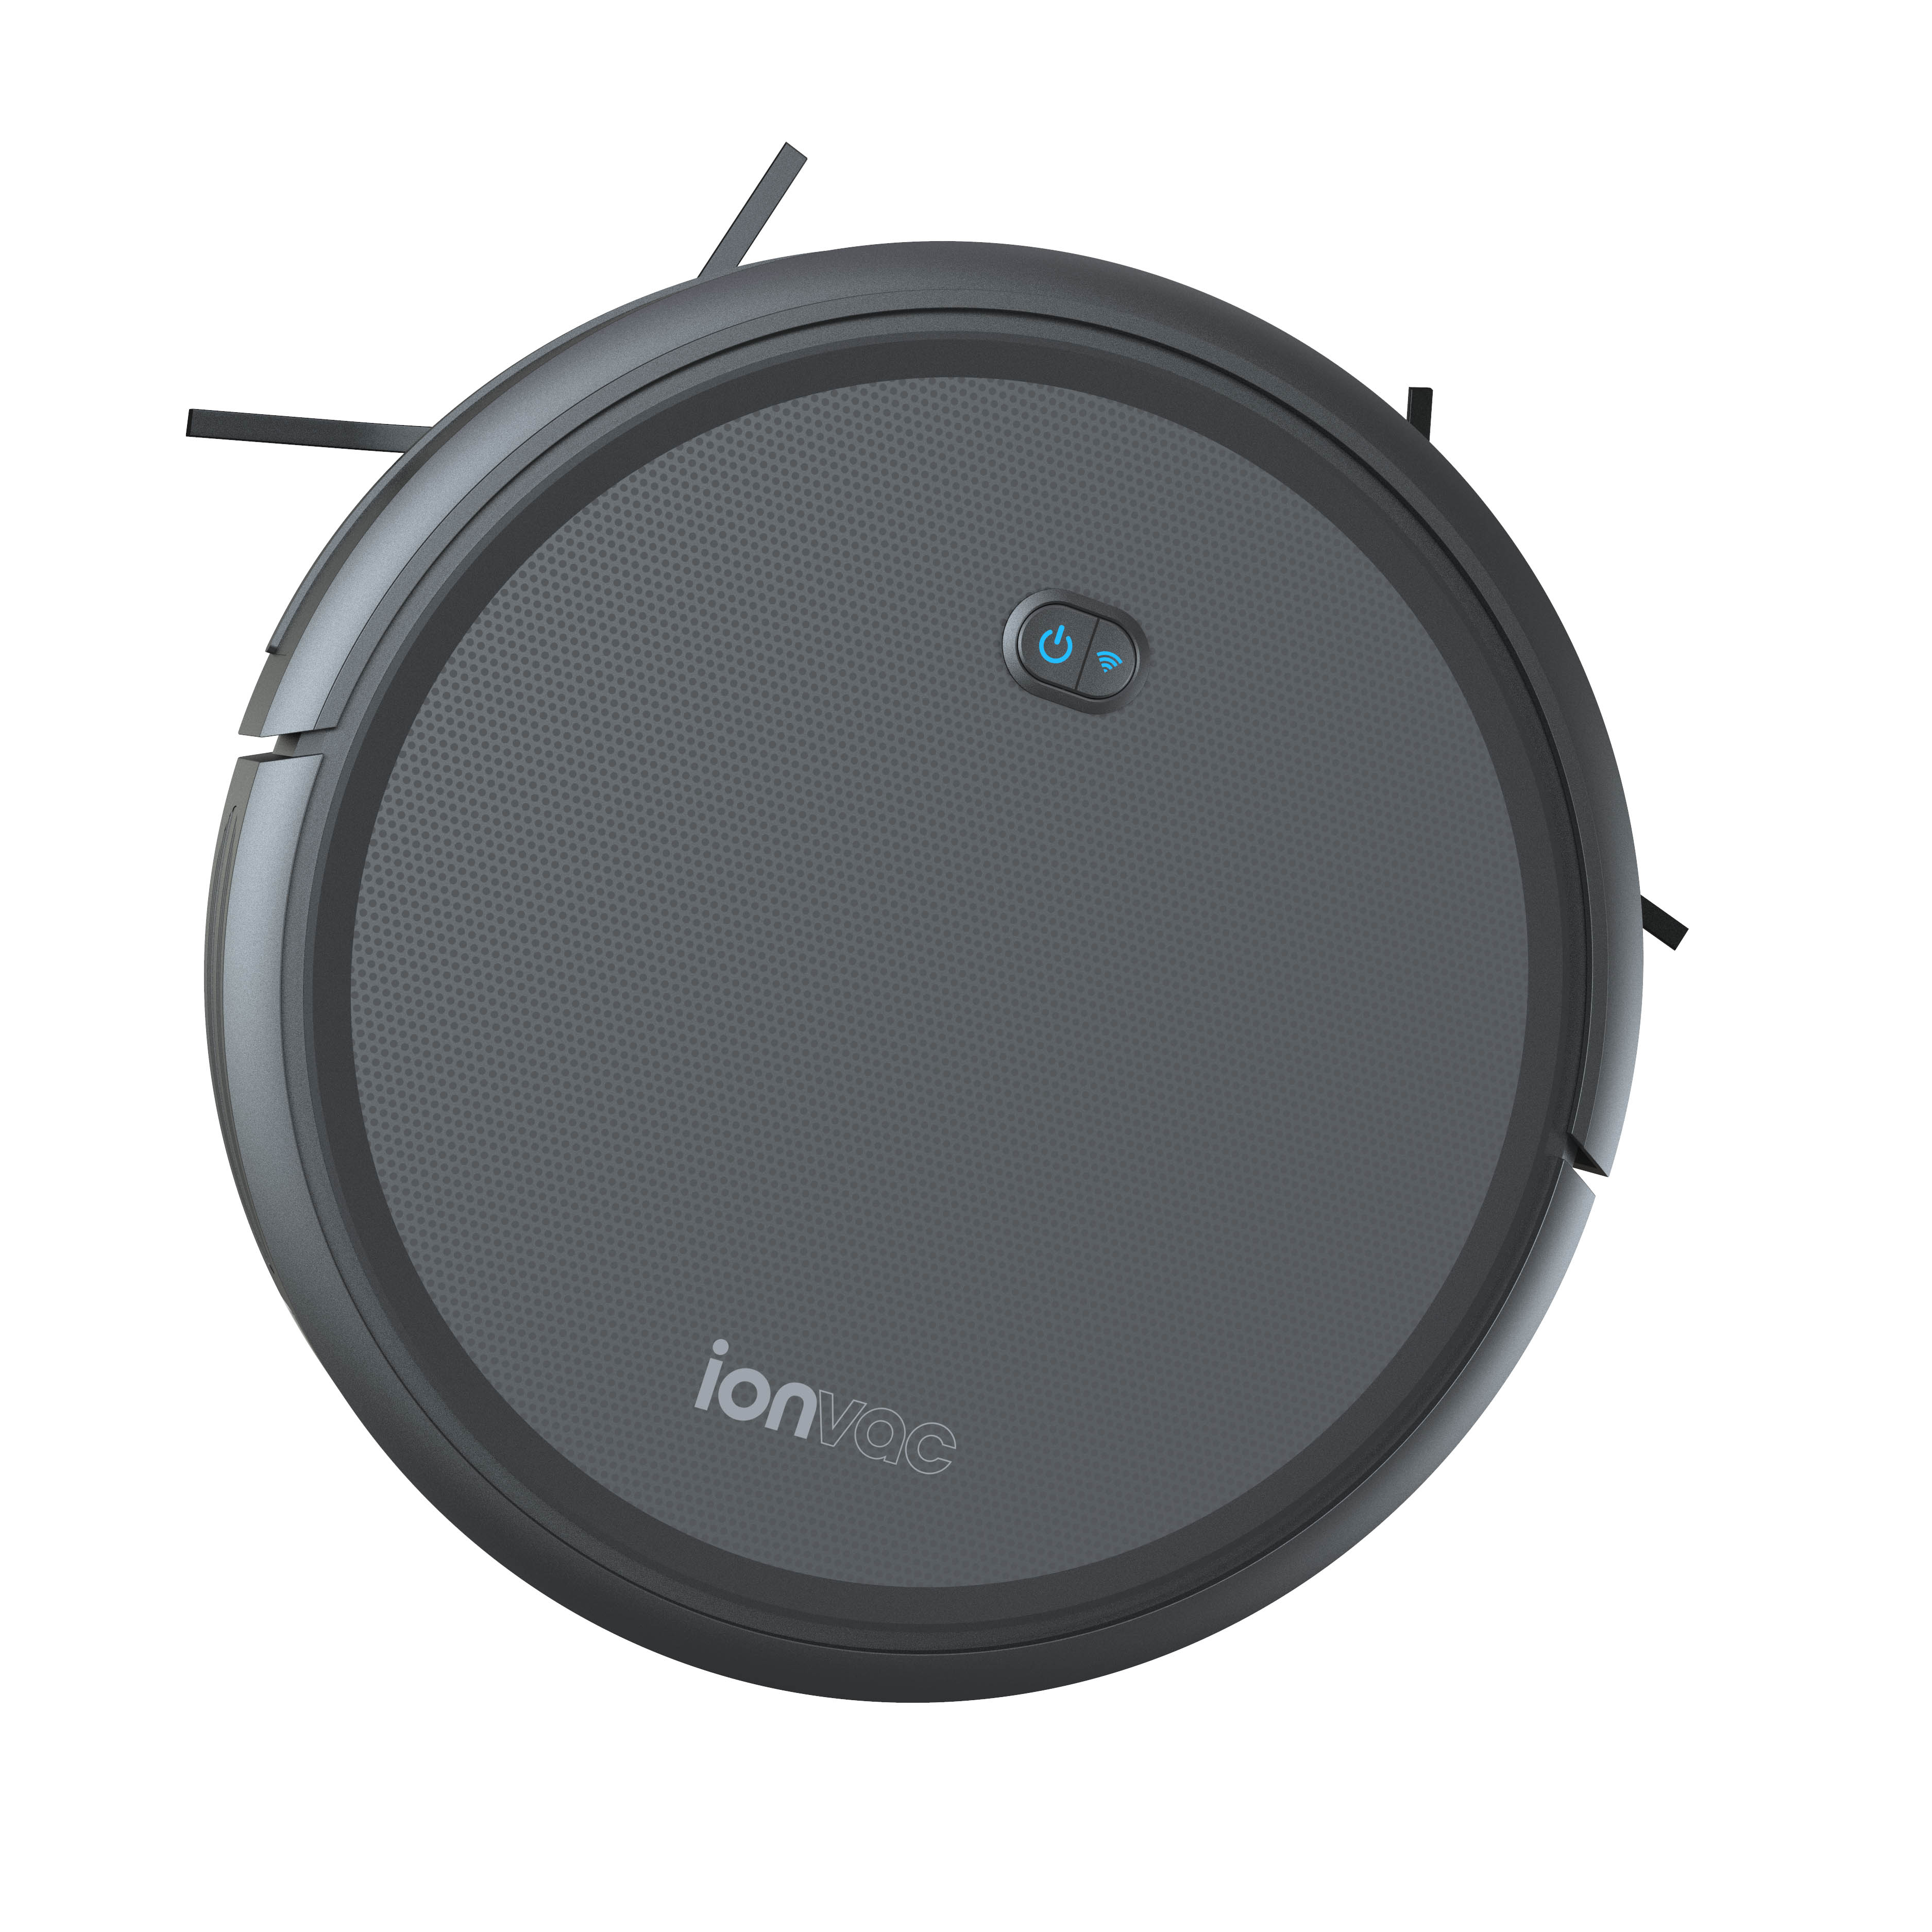 Ionvac SmartClean 2000 Robovac - WiFi Robotic Vacuum with App/Remote  Control, New 